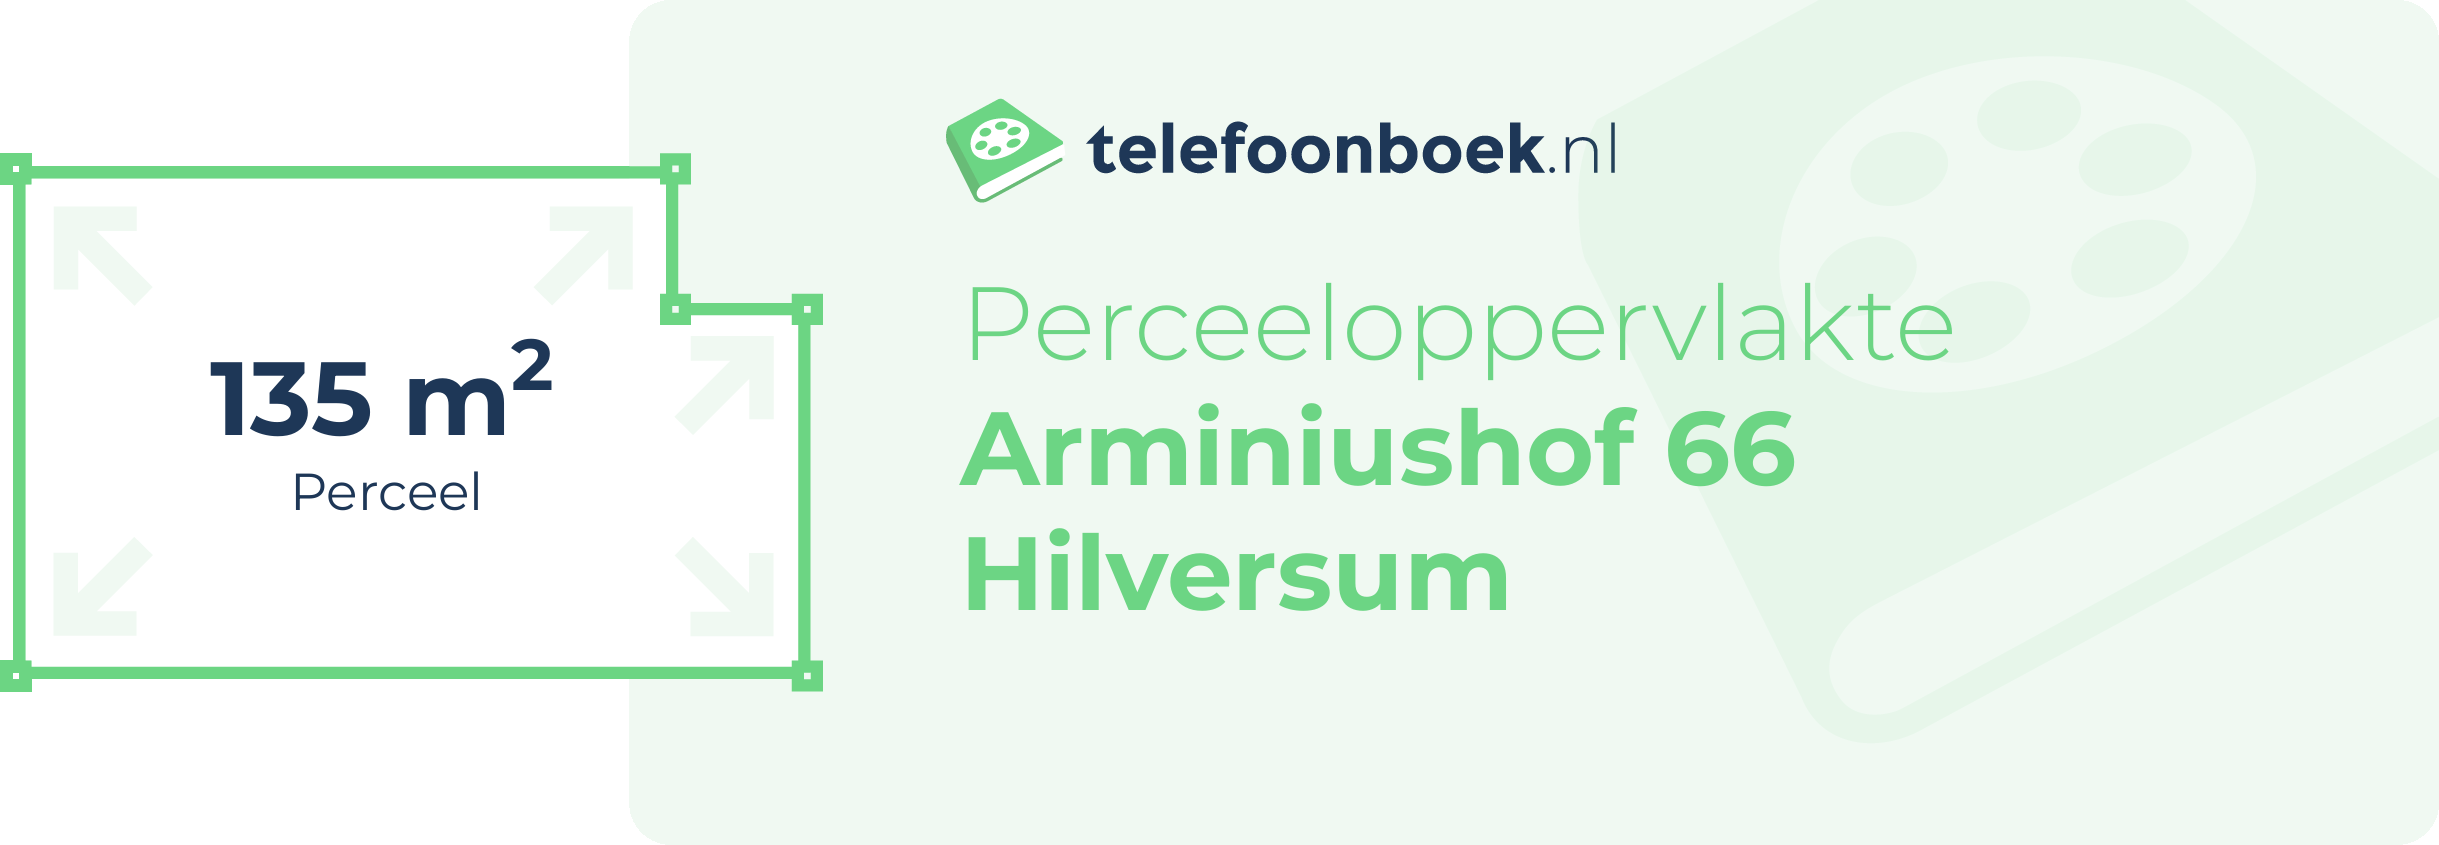 Perceeloppervlakte Arminiushof 66 Hilversum